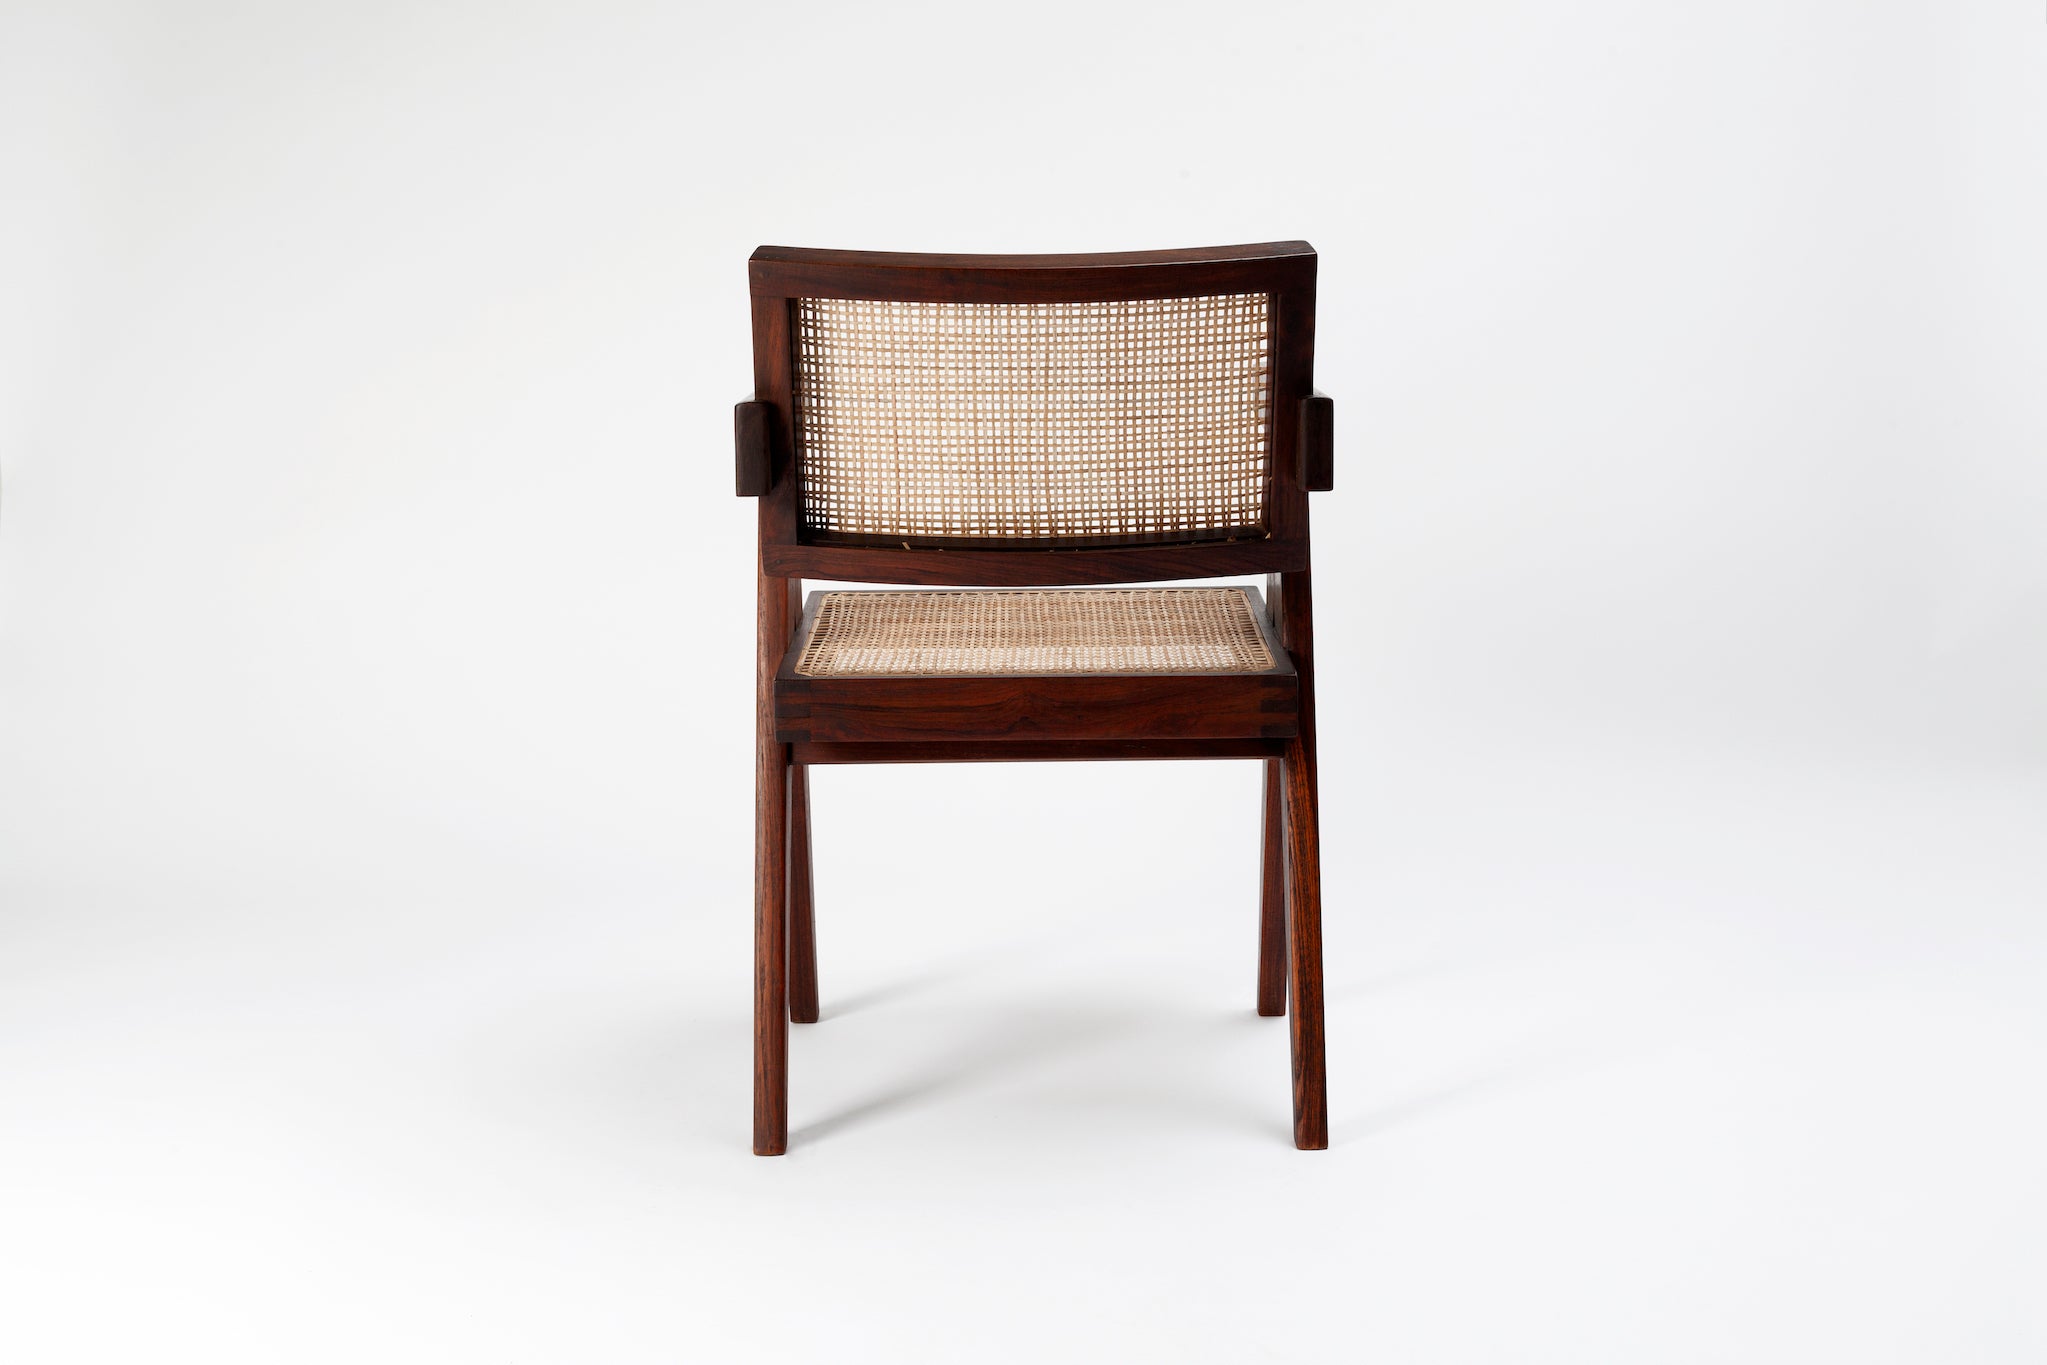 Pierre Jeanneret Office Chair - The Design Part